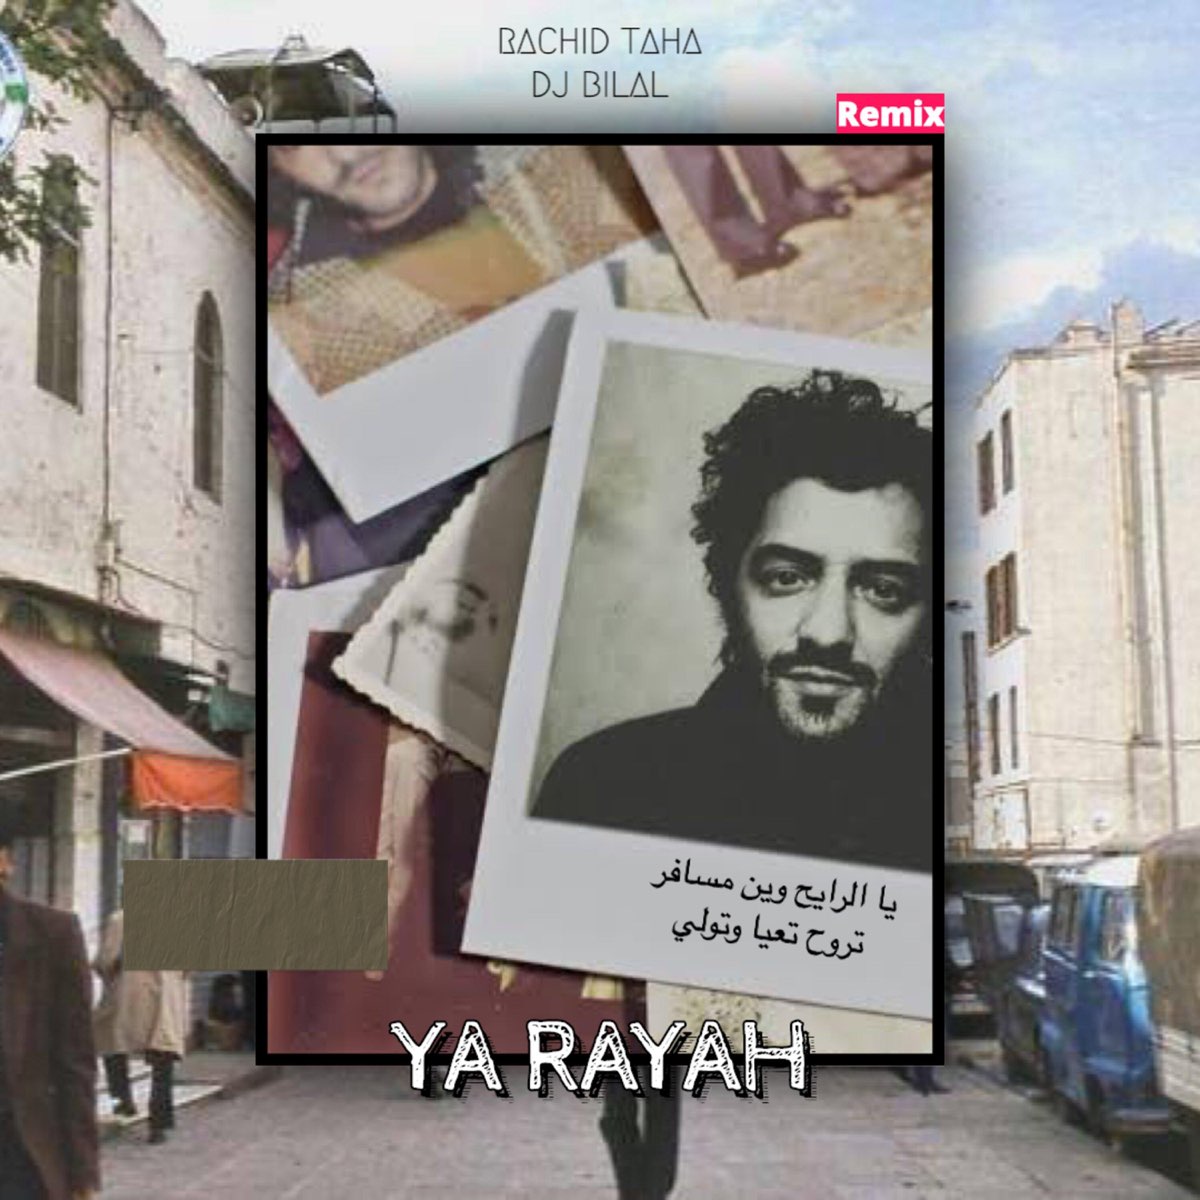 Ya Rayah يا رايح (feat. Rachid Taha) [Remix] [Remix] - Single by Dj Bilal  on Apple Music